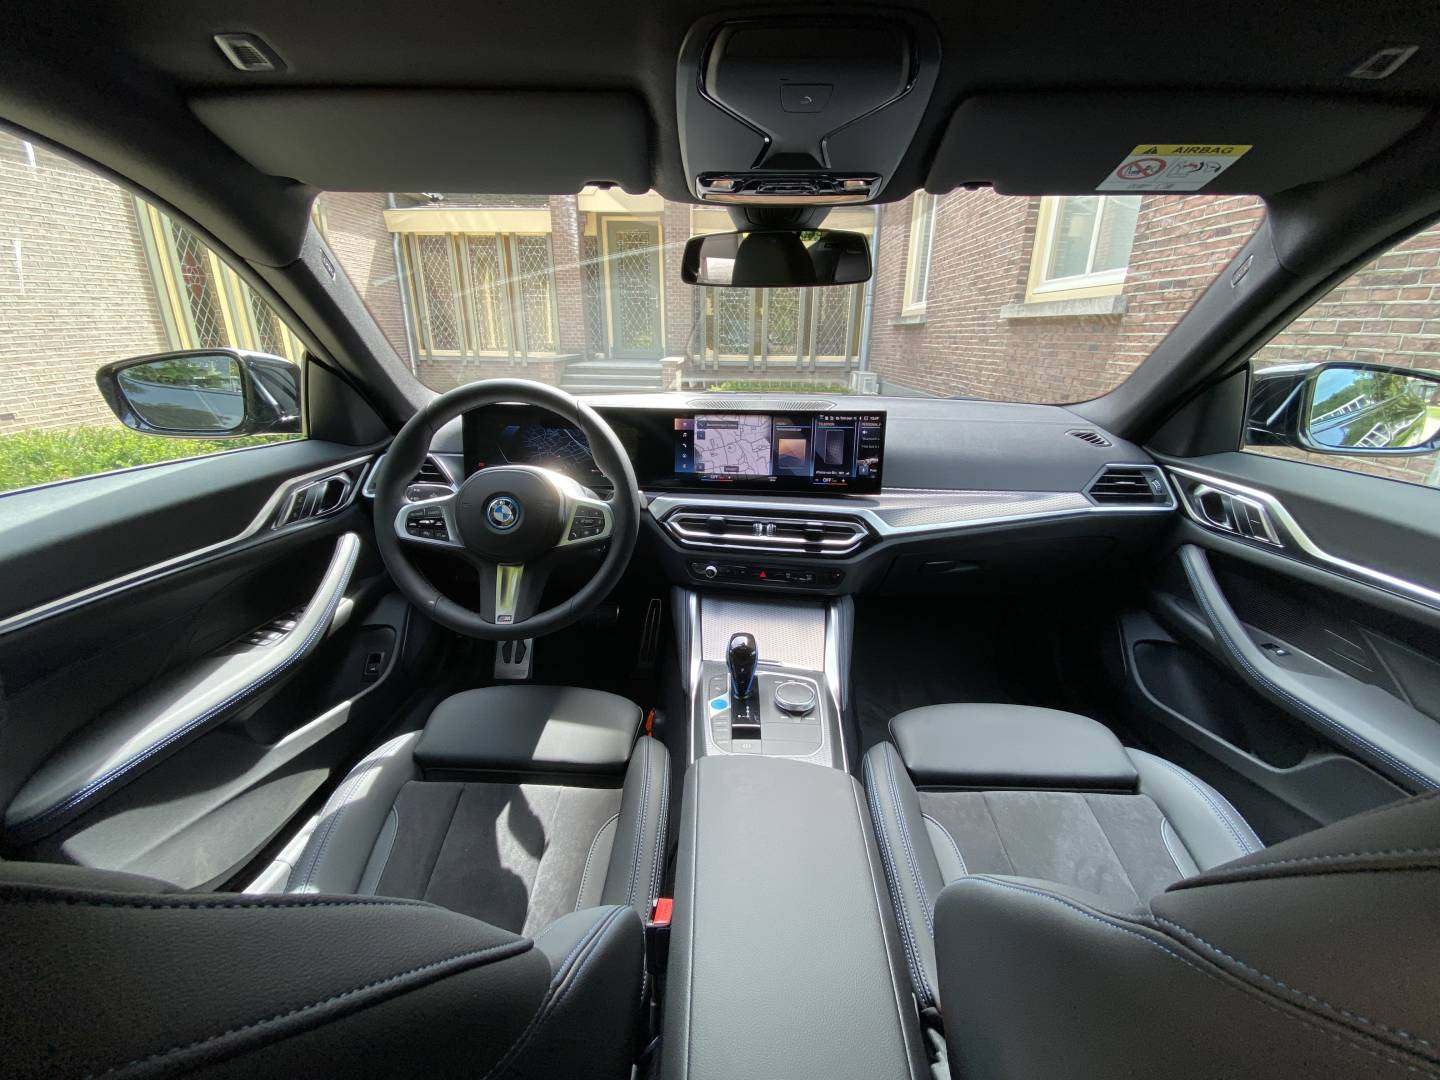 BMW i4 interieur dashboard - kopie.jpeg